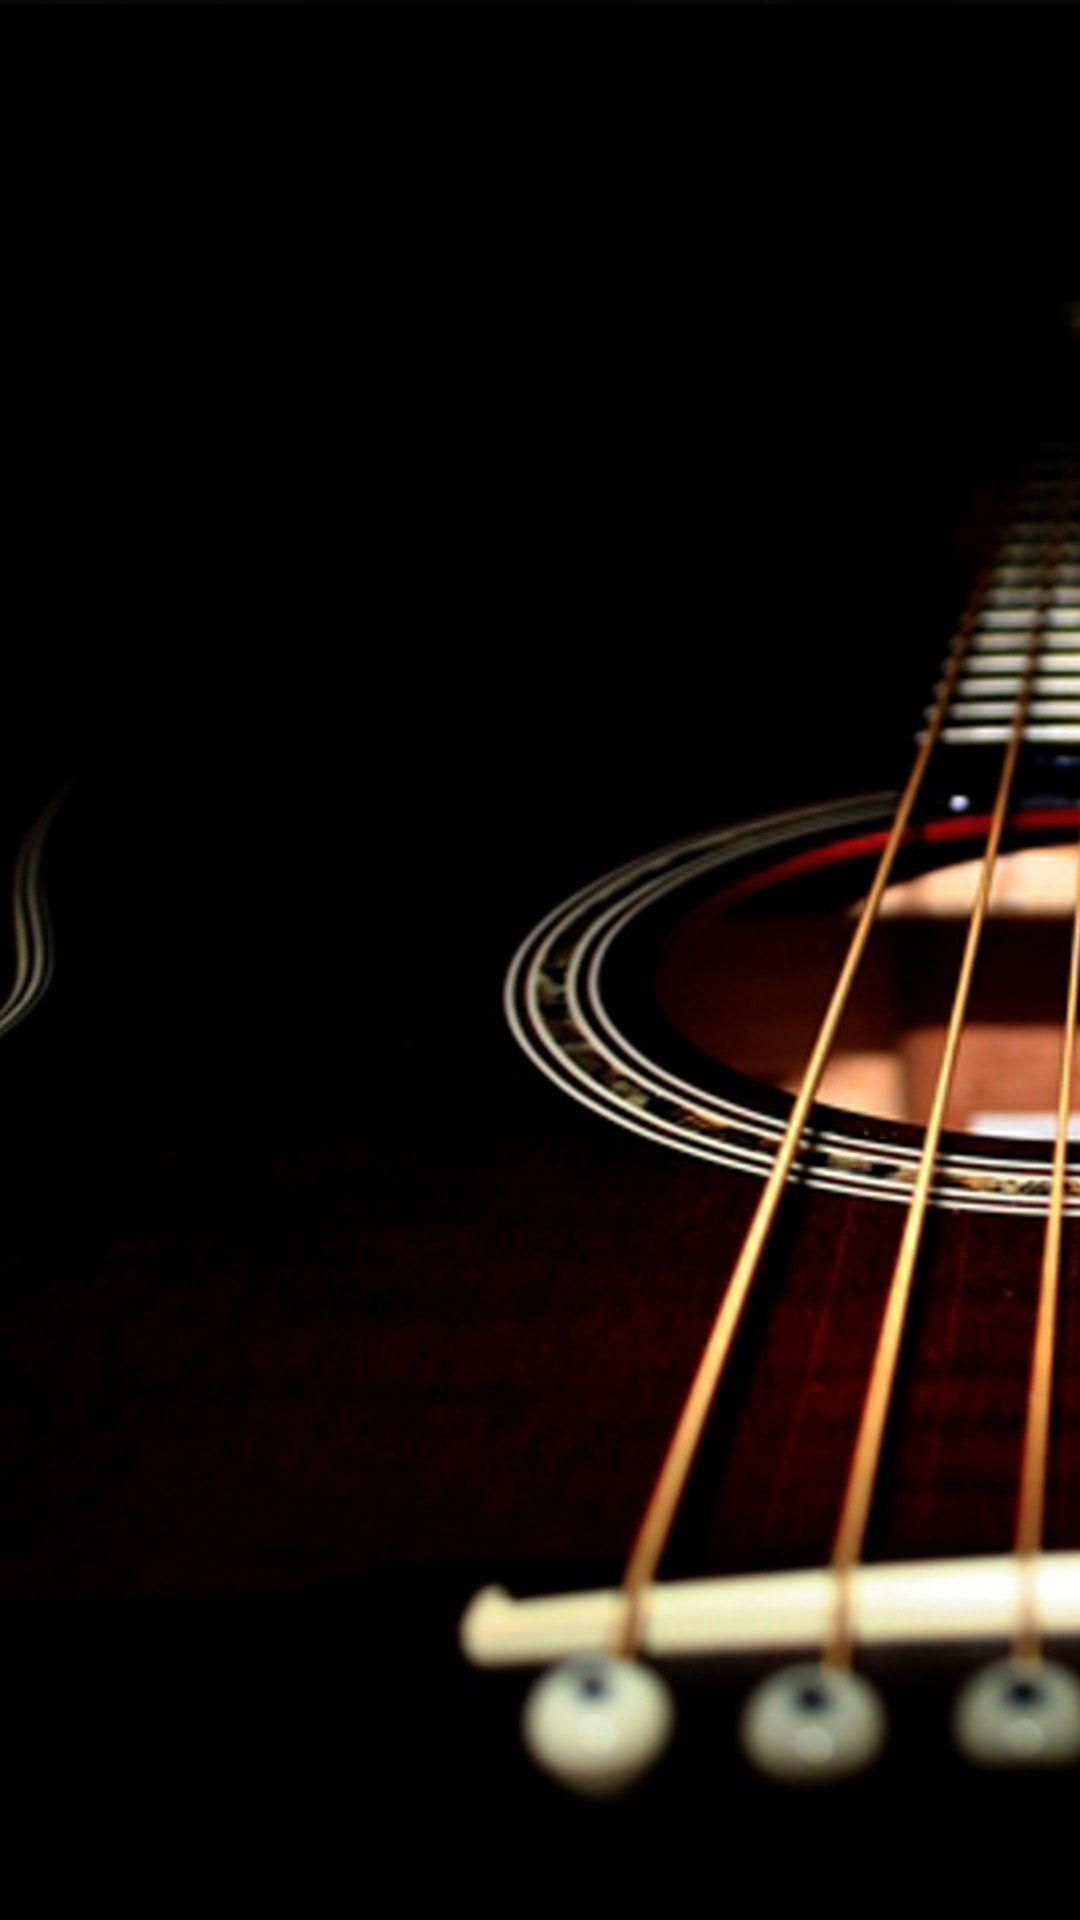 Guitar Iphone Wallpapers Top Free Guitar Iphone Backgrounds Wallpaperaccess